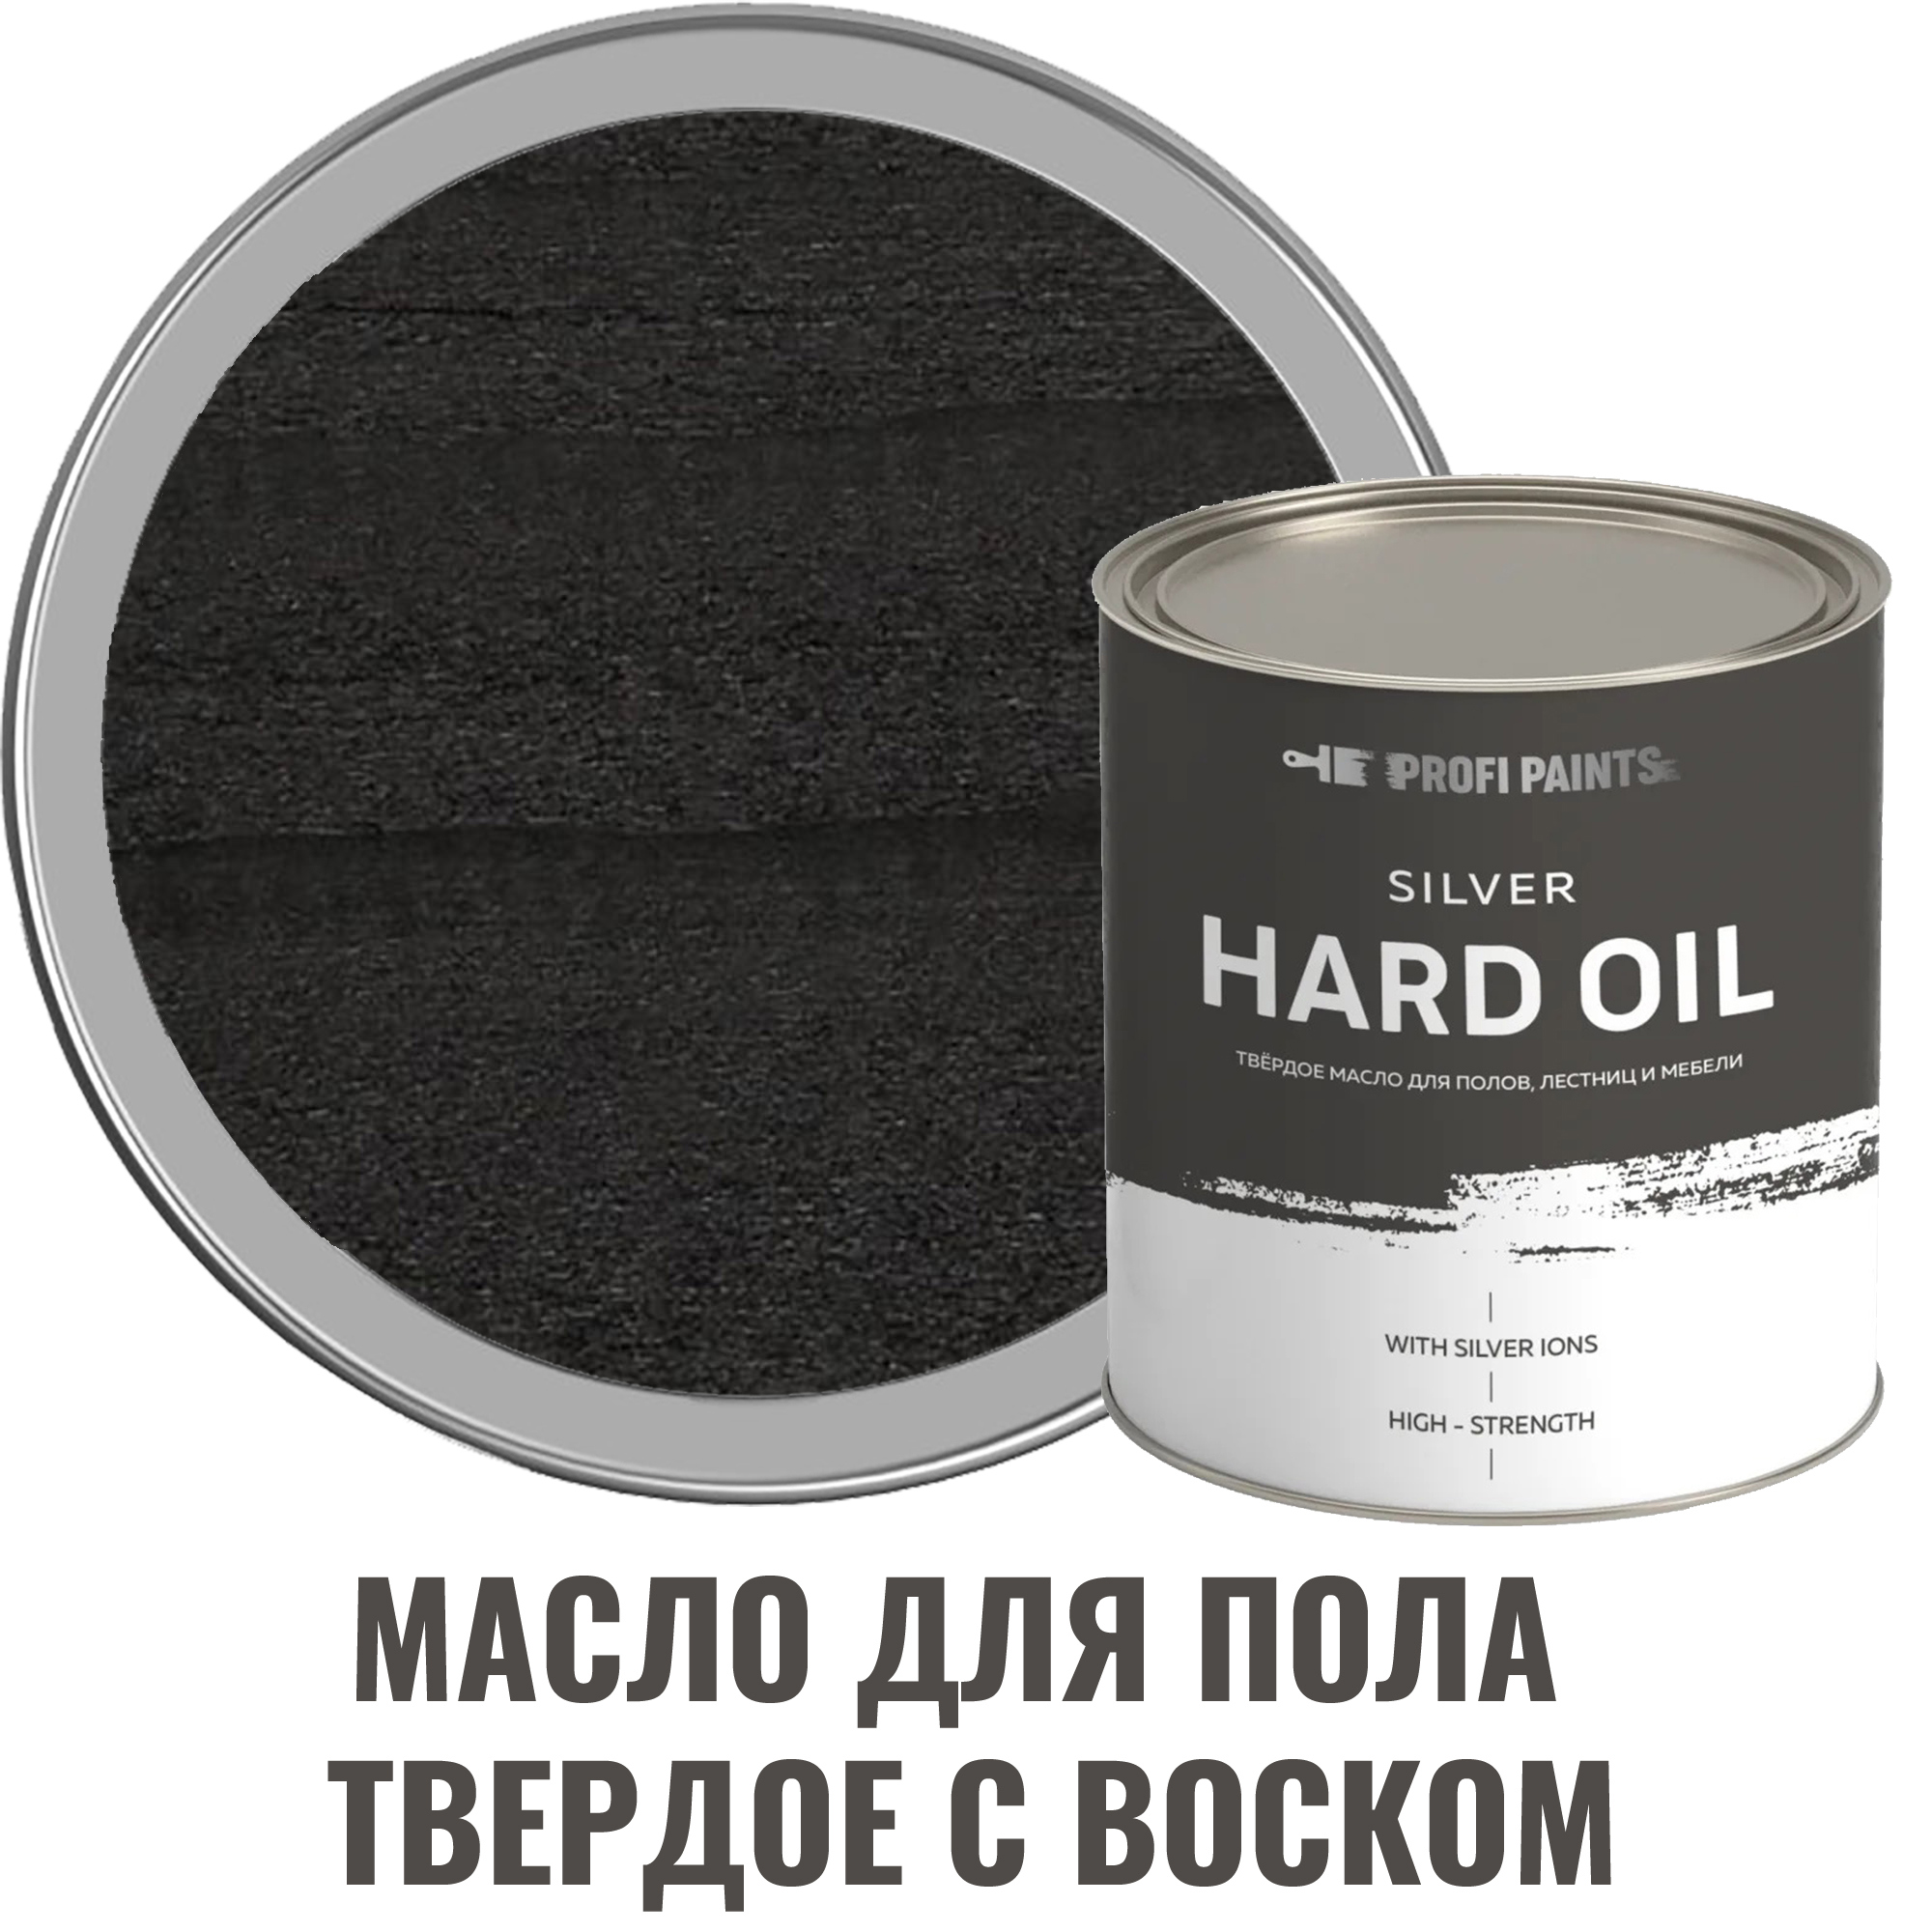 91095502 Масло для пола 10770_D Silver Hard Oil цвет черный 2.7 л STLM-0481856 PROFIPAINTS